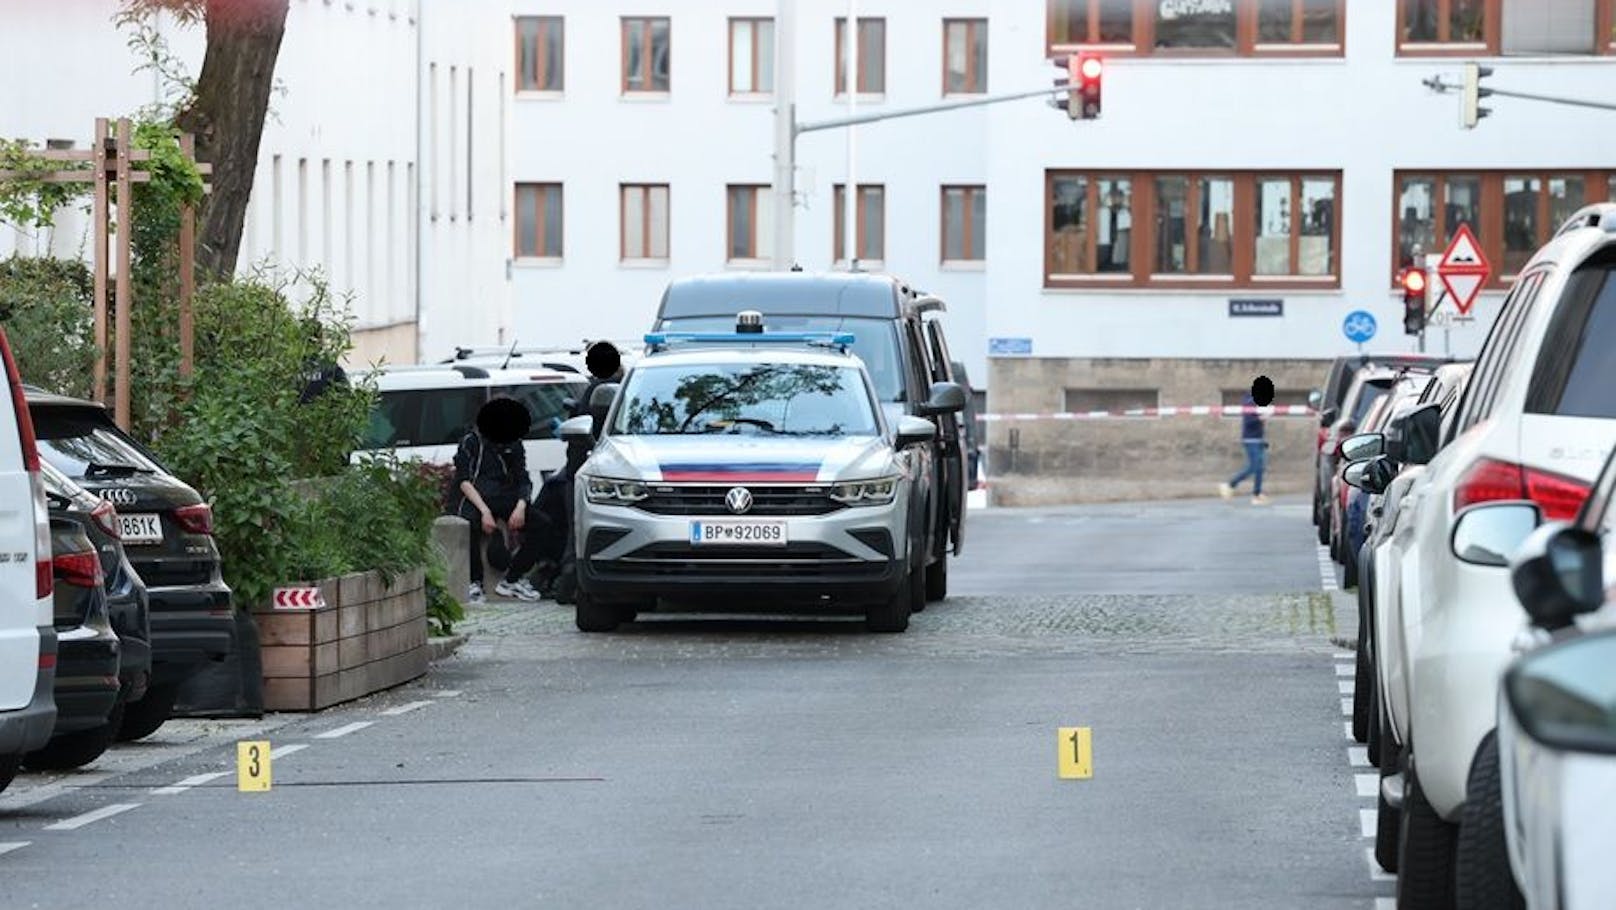 Mann in Wien angeschossen – jetzt kommt alles ans Licht